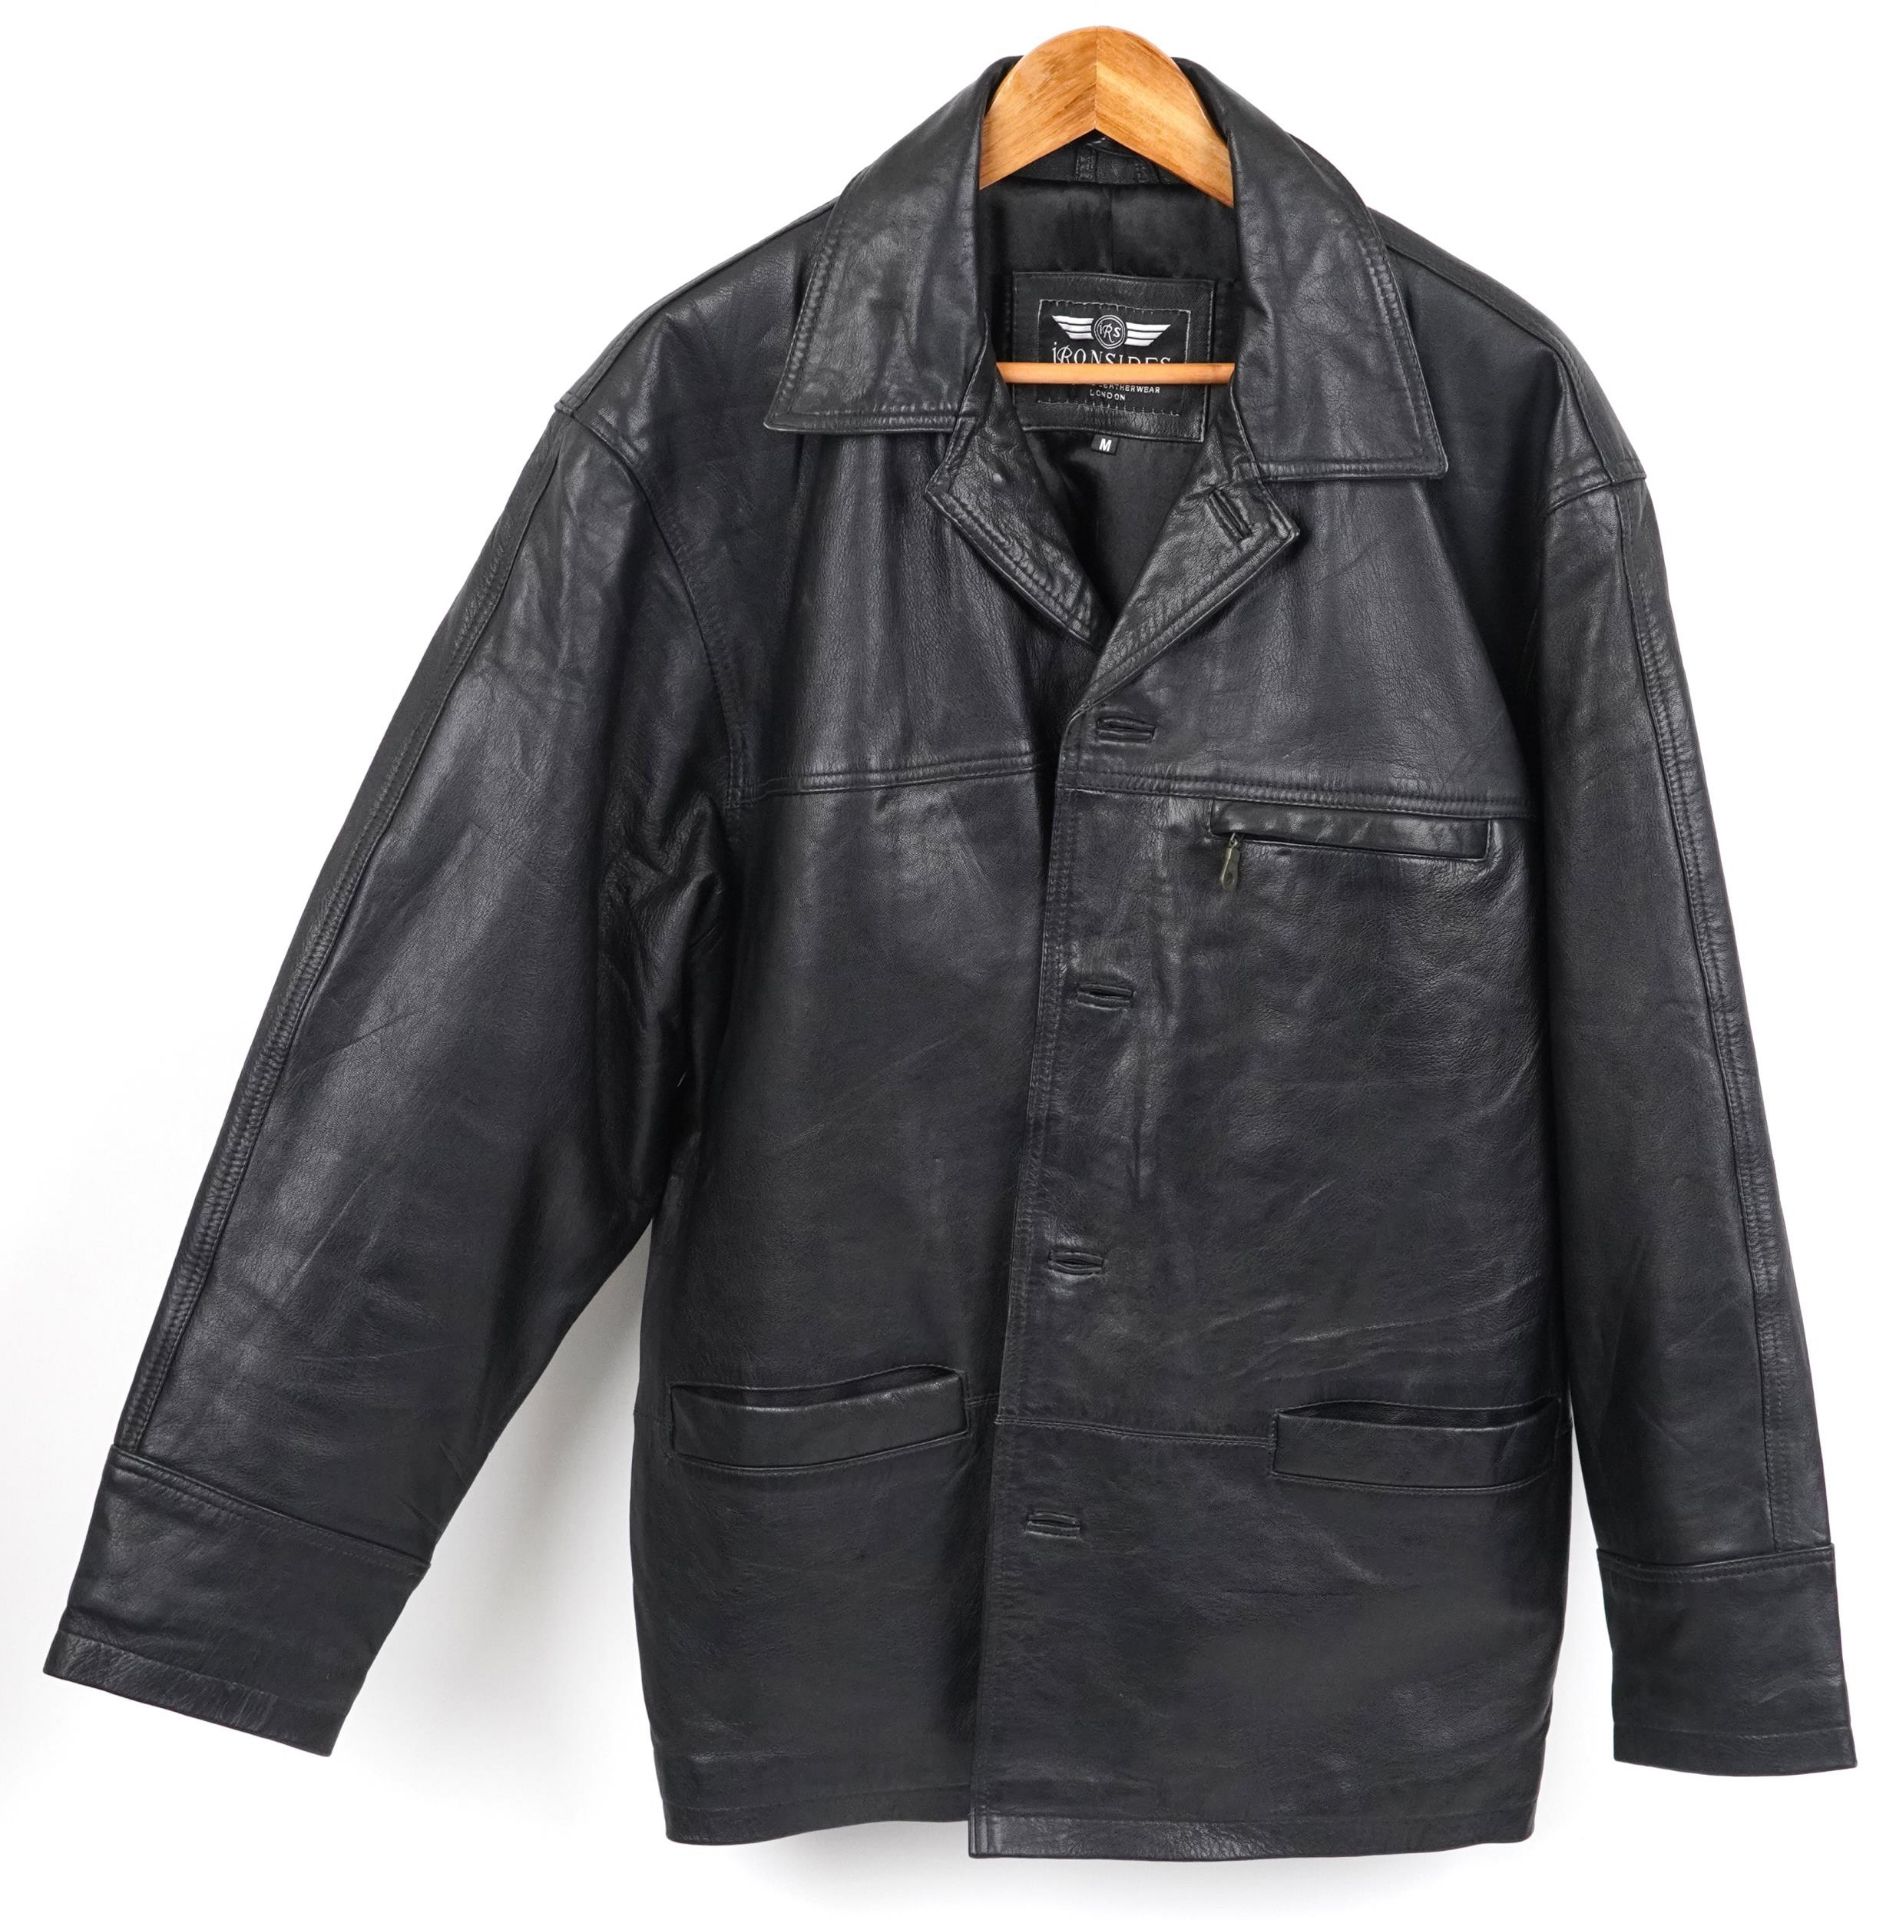 Gentlemen's Ironsides leather coat, size Medium